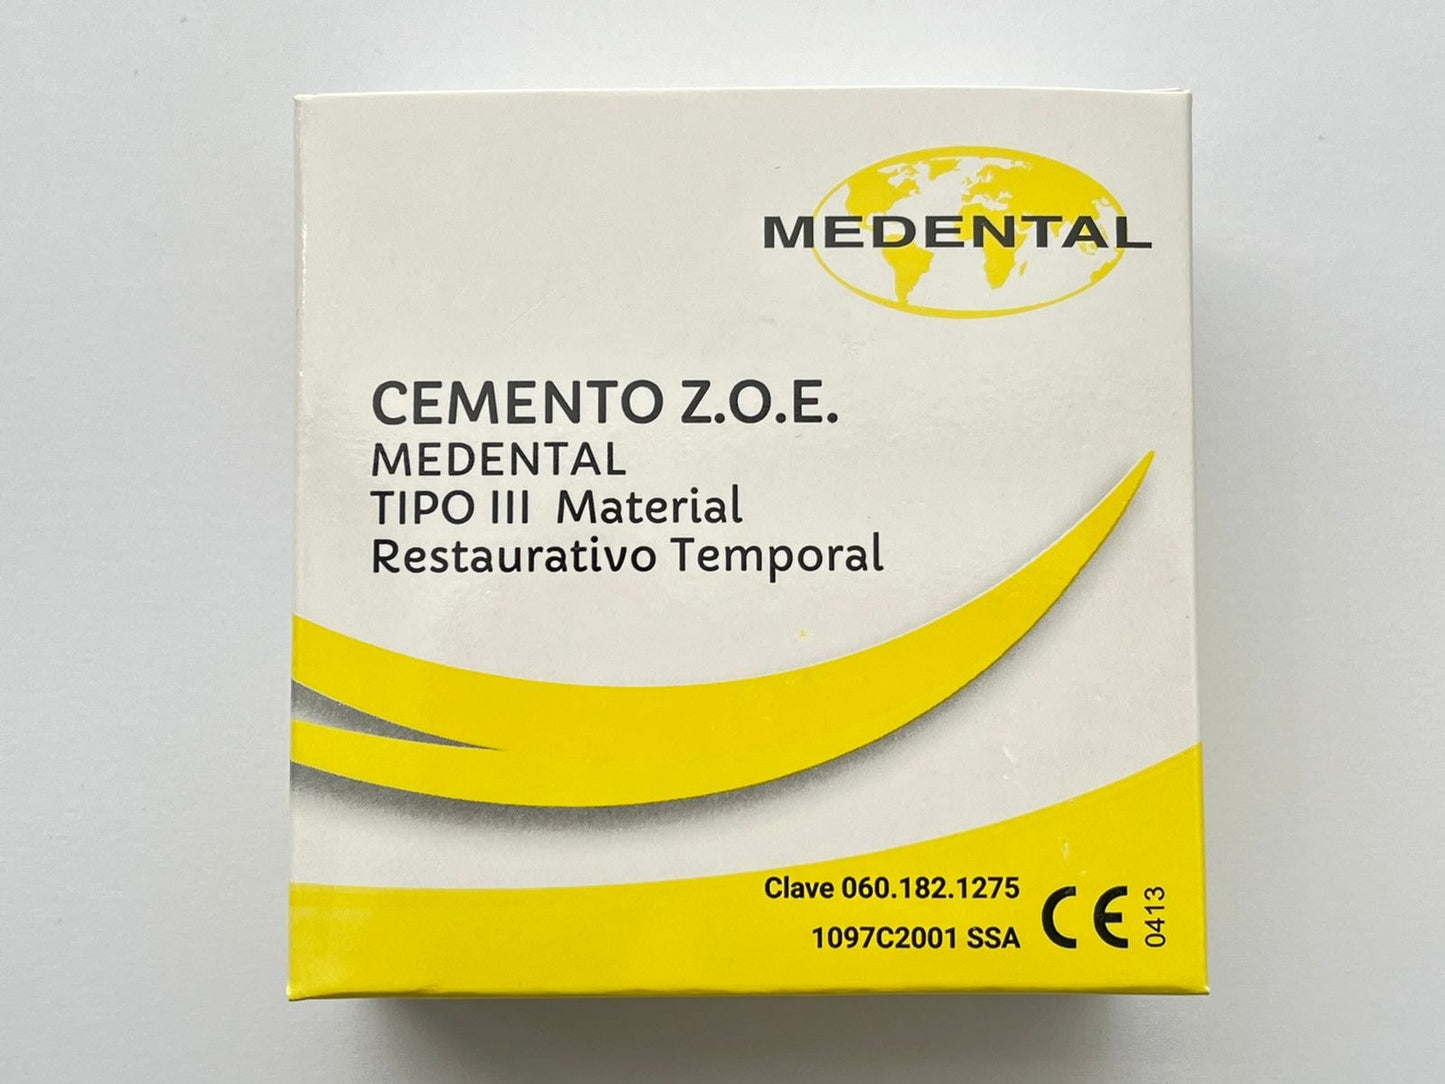 Zoe tipo III Material restaurativo temporal (IRM)